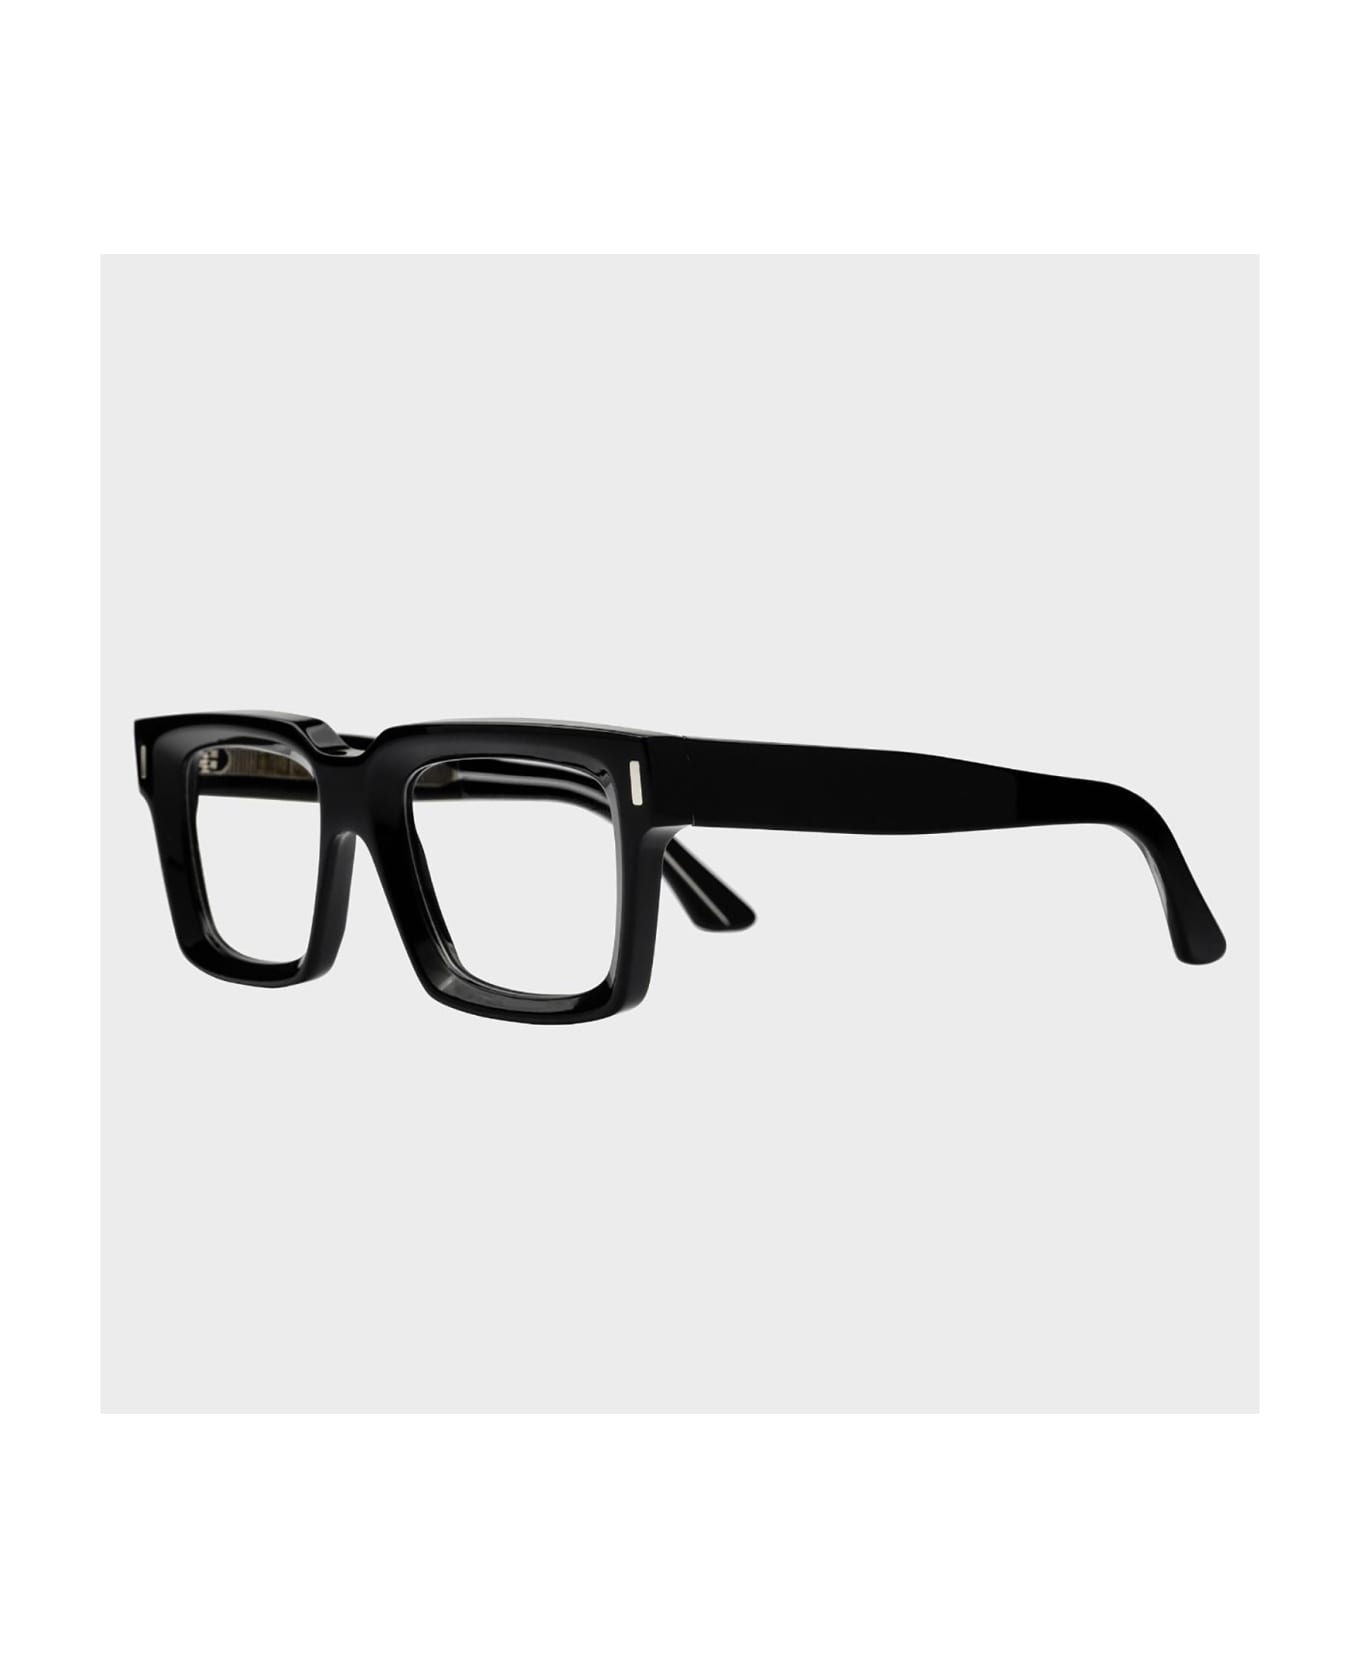 Cutler and Gross 1386 Eyewear - Black アイウェア